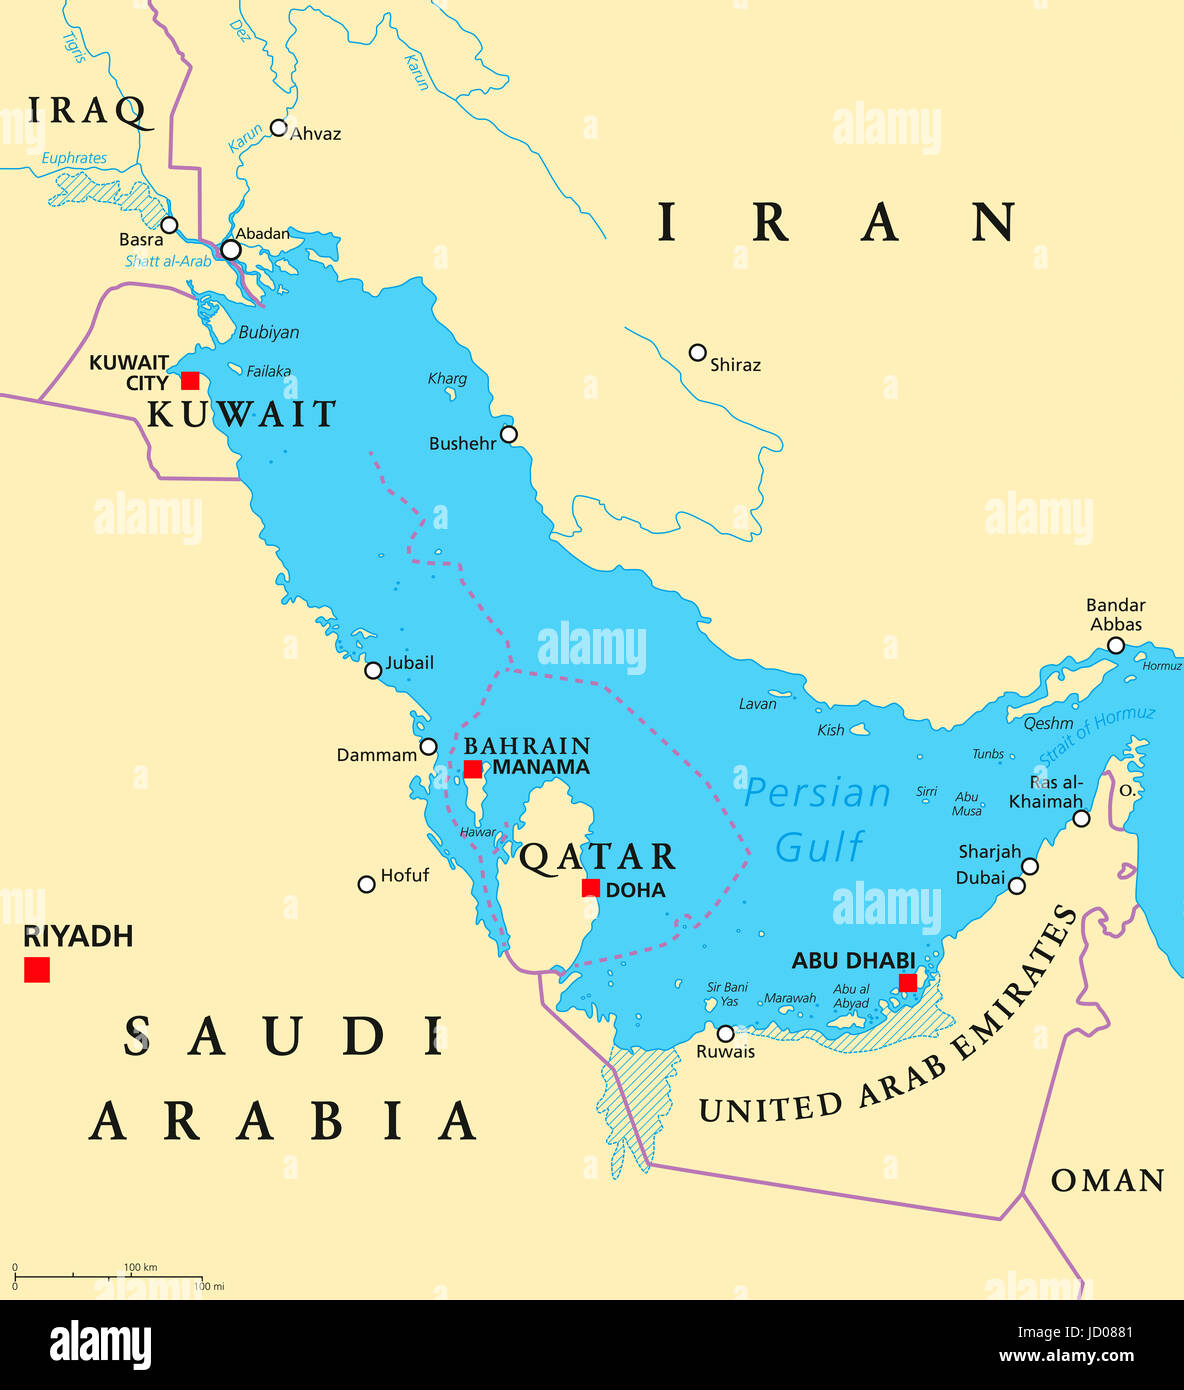 Persian Gulf region countries political map. Iran, Iraq, Kuwait, Qatar, Bahrain, United Arab Emirates, Saudi Arabia, Oman. Illustration. English. Stock Photo